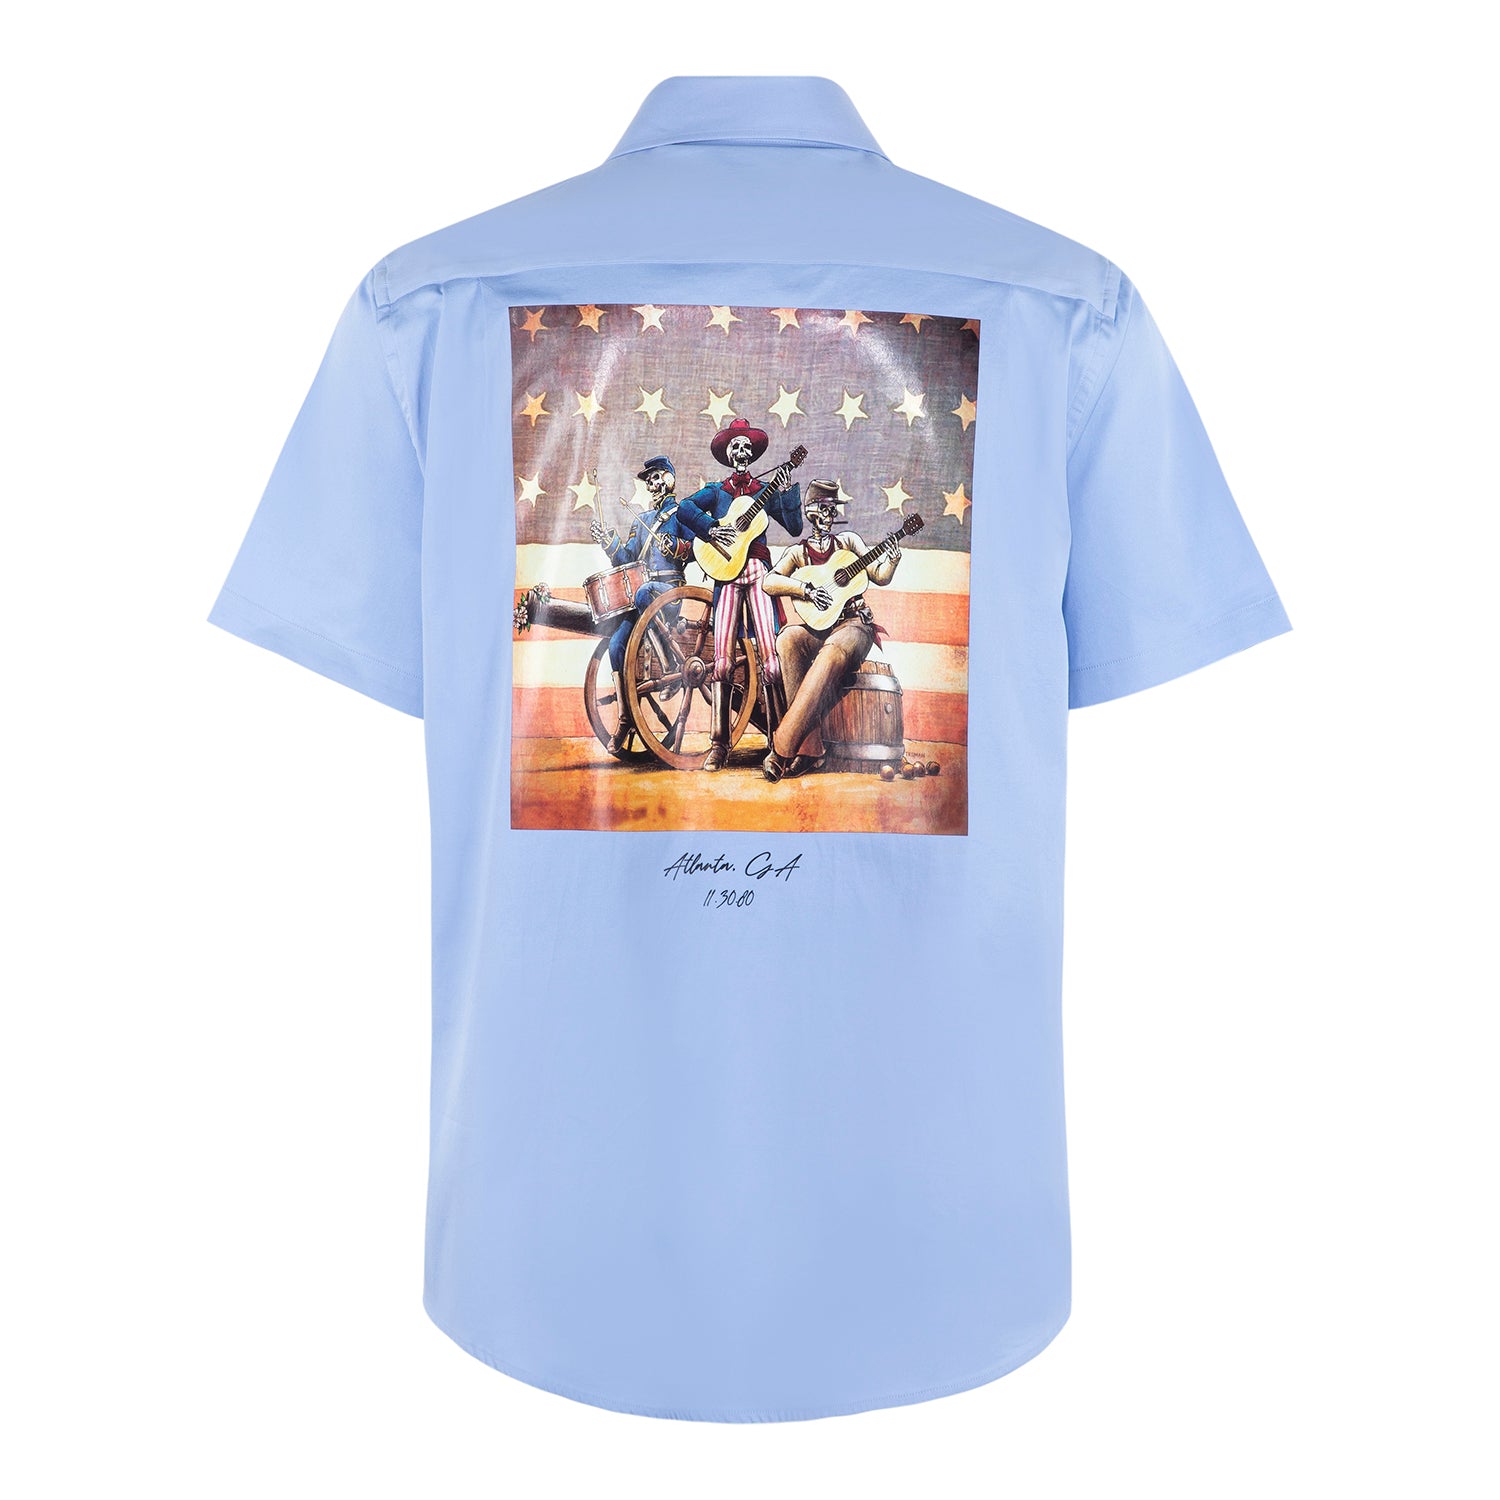 Grateful Dead Short Sleeve Concert Series Atlanta Shirt - Section 119